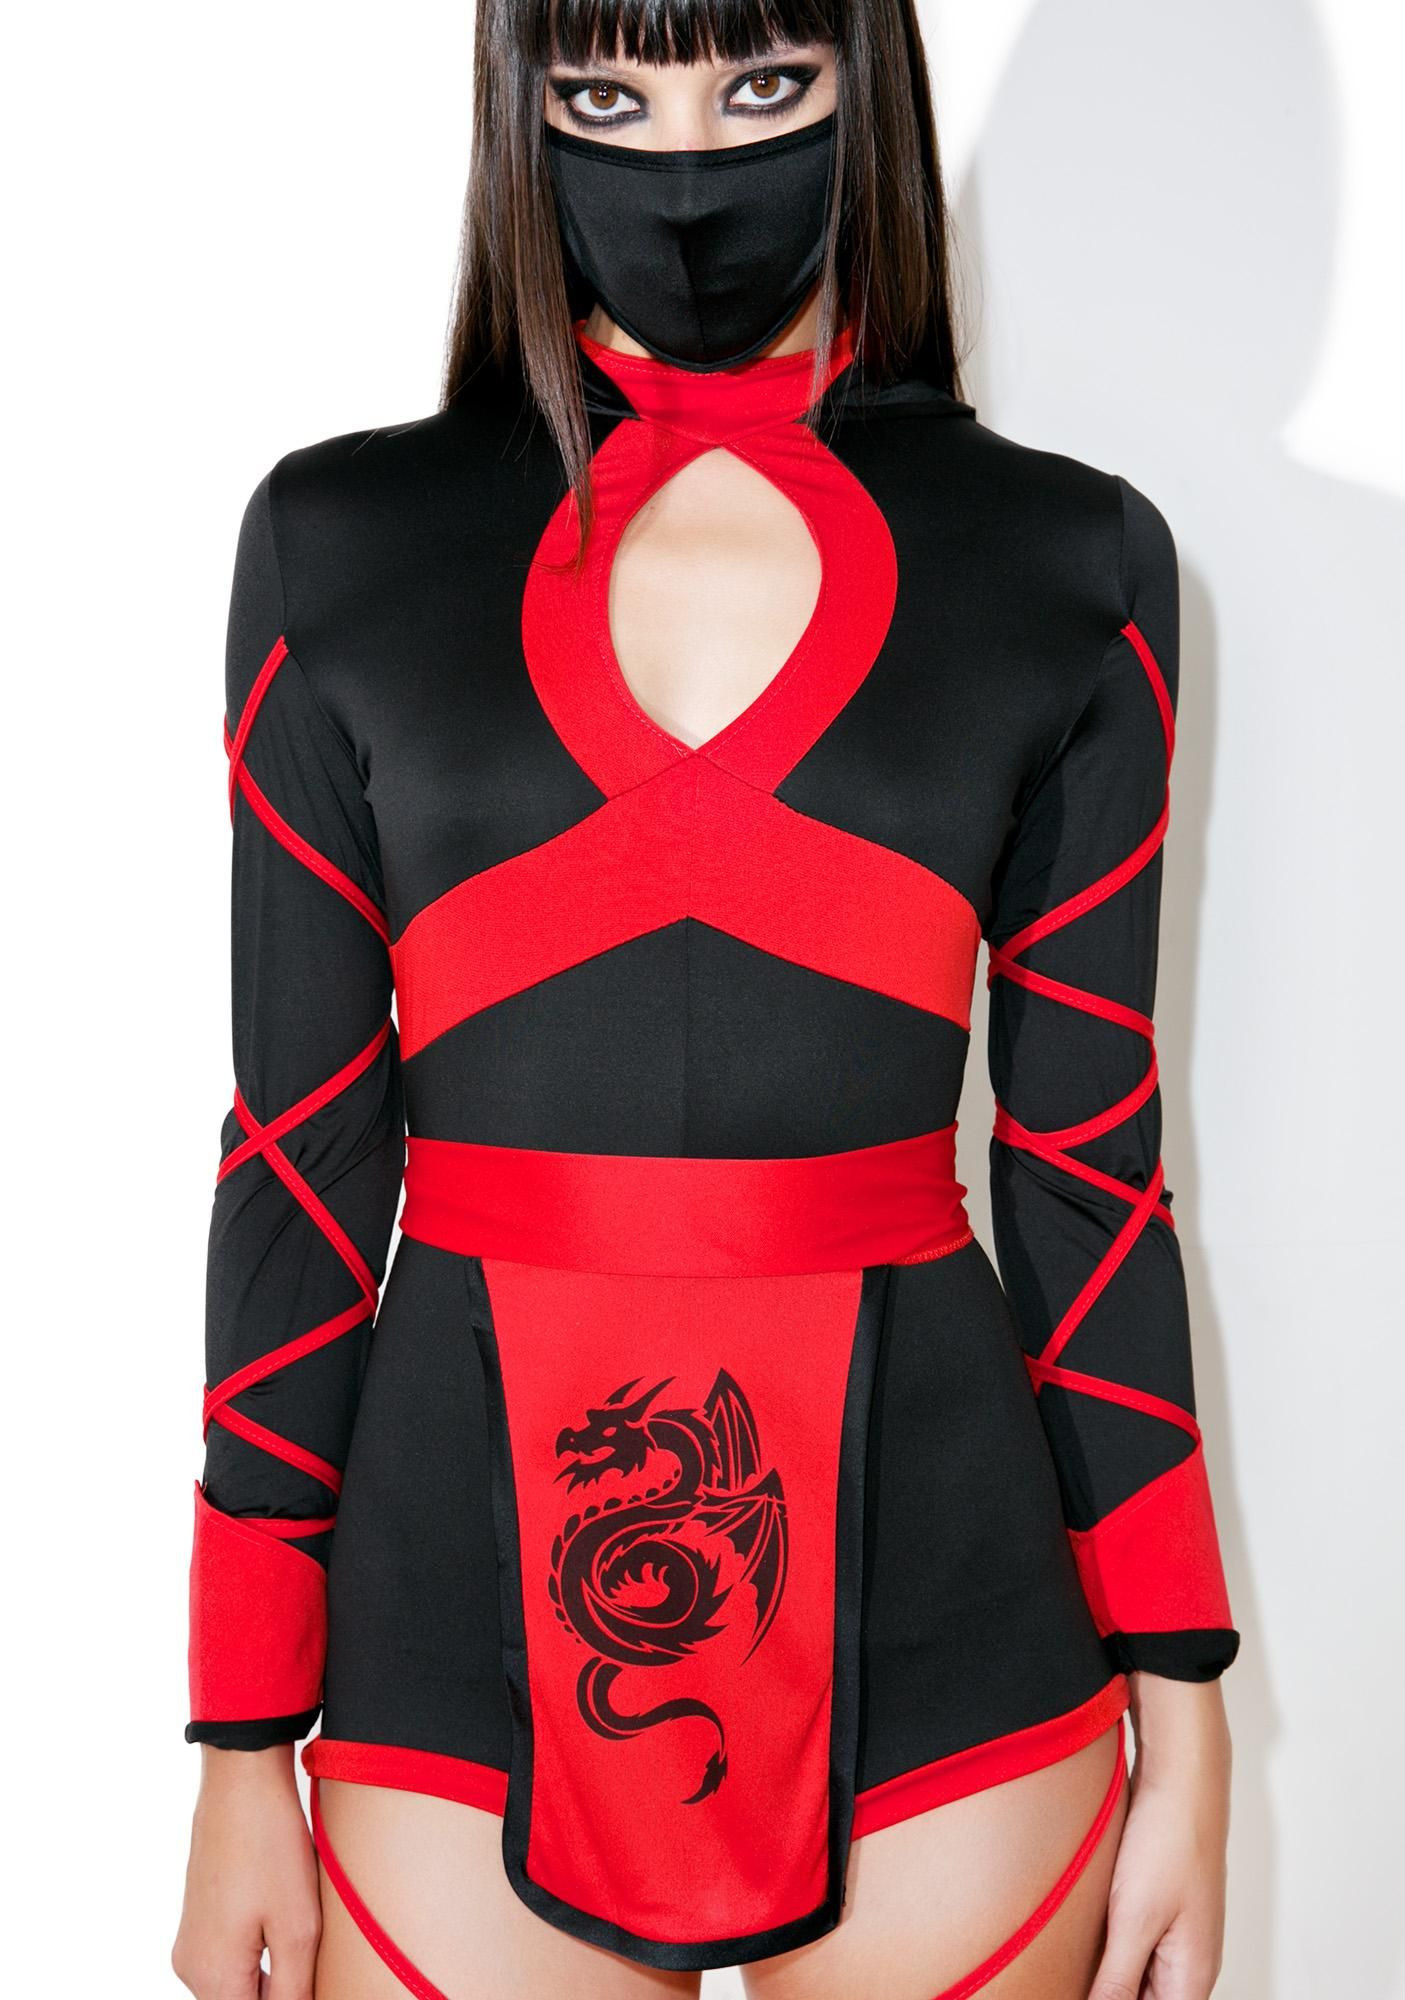 Female Ninja Costume DIY
 Pin on "So Seductive"